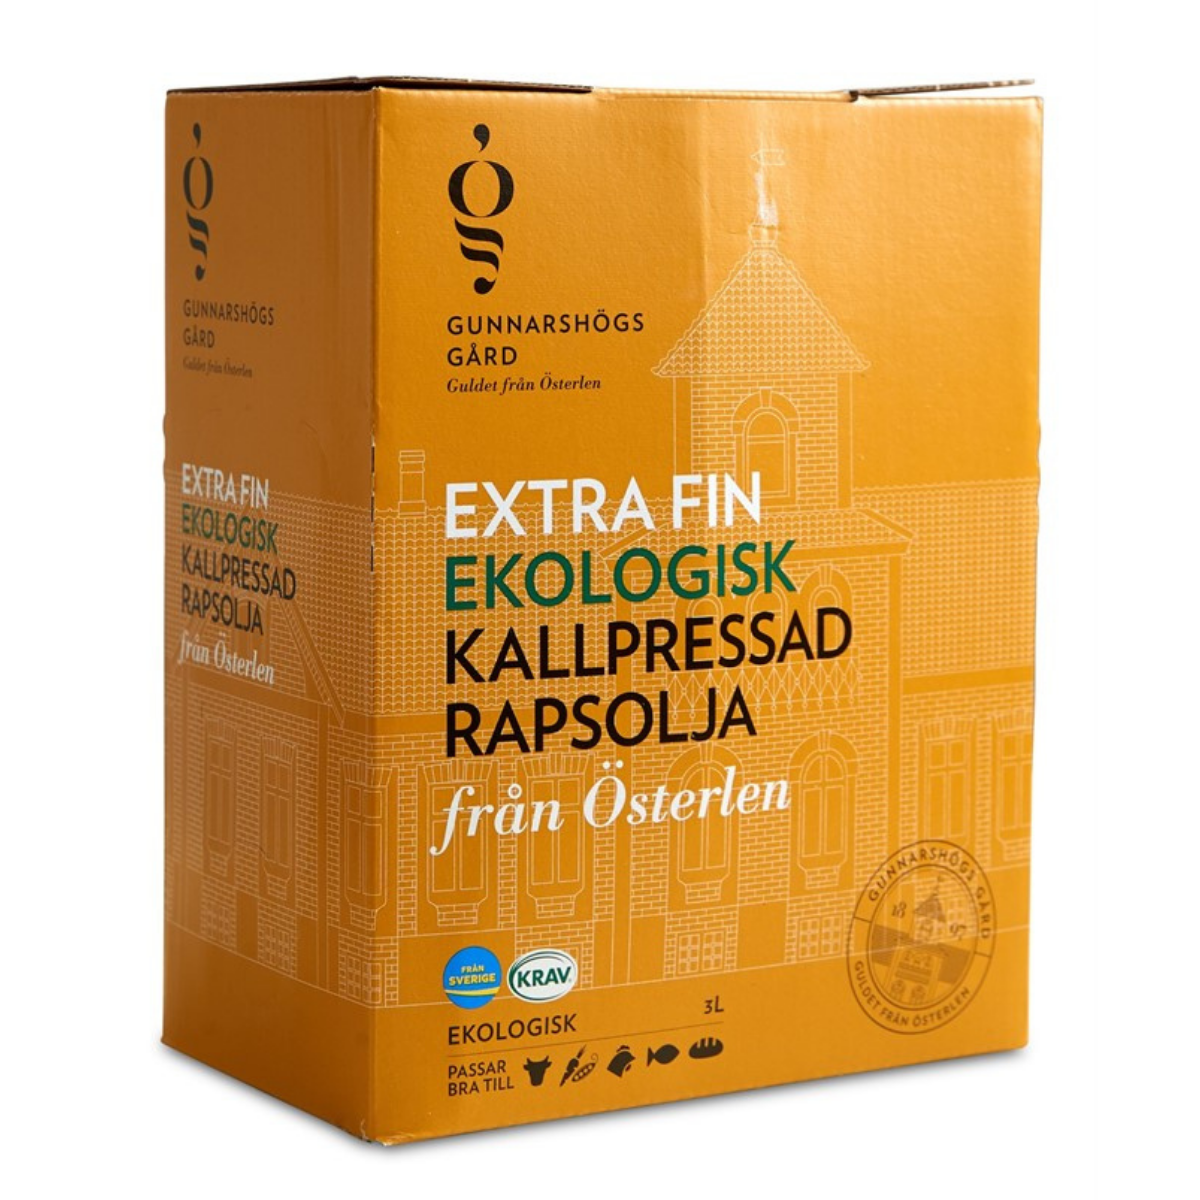 Gunnarshögs Gård's Rapsolja 3L bag-in-box'